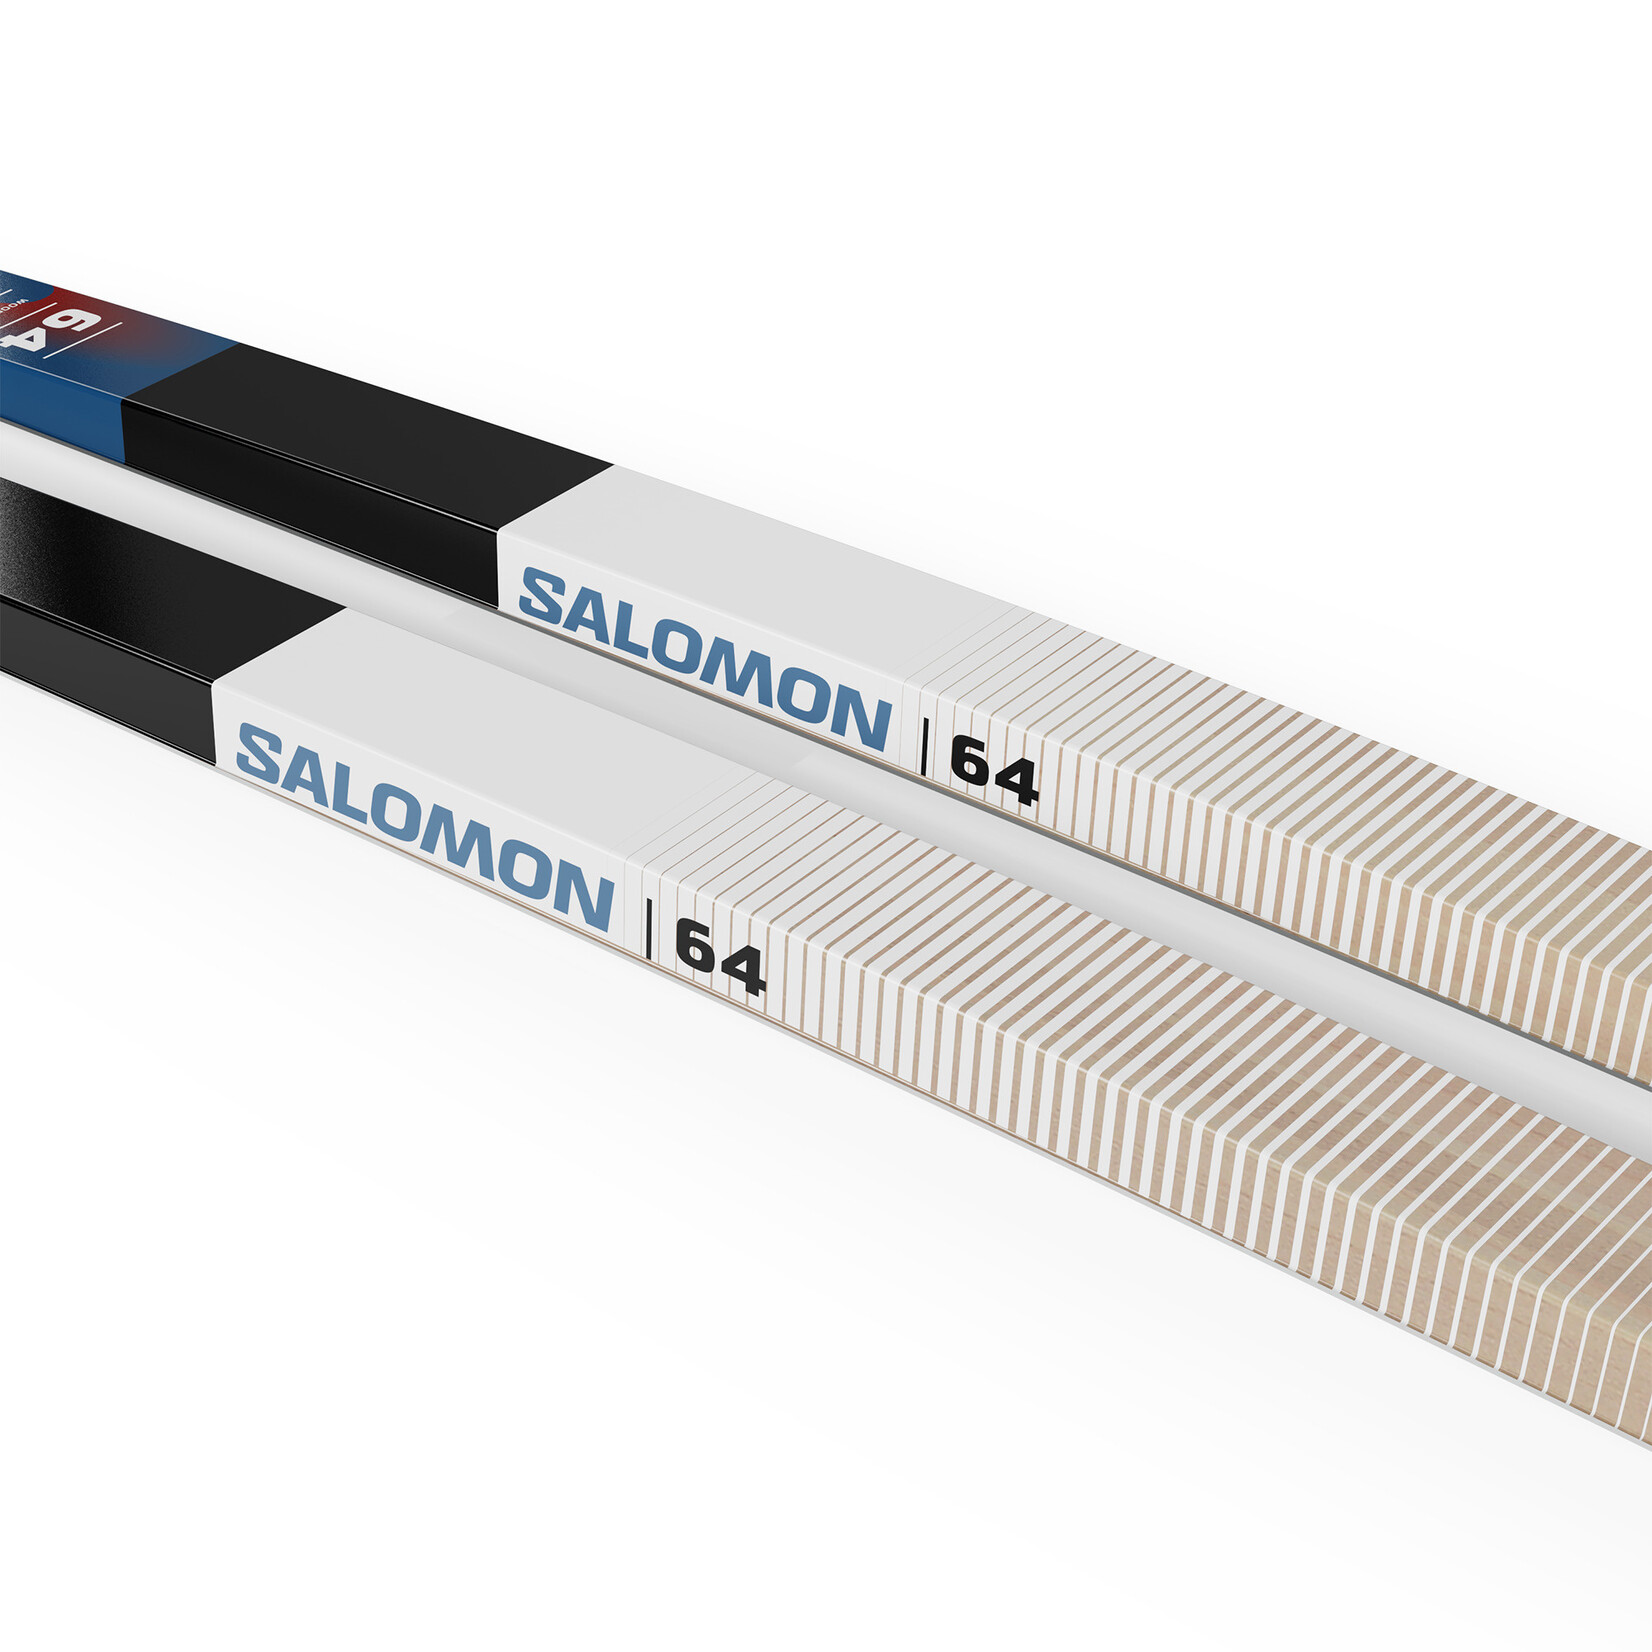 SALOMON Salomon Escape Outpath 64 Posi Flat Classic Ski 24/25